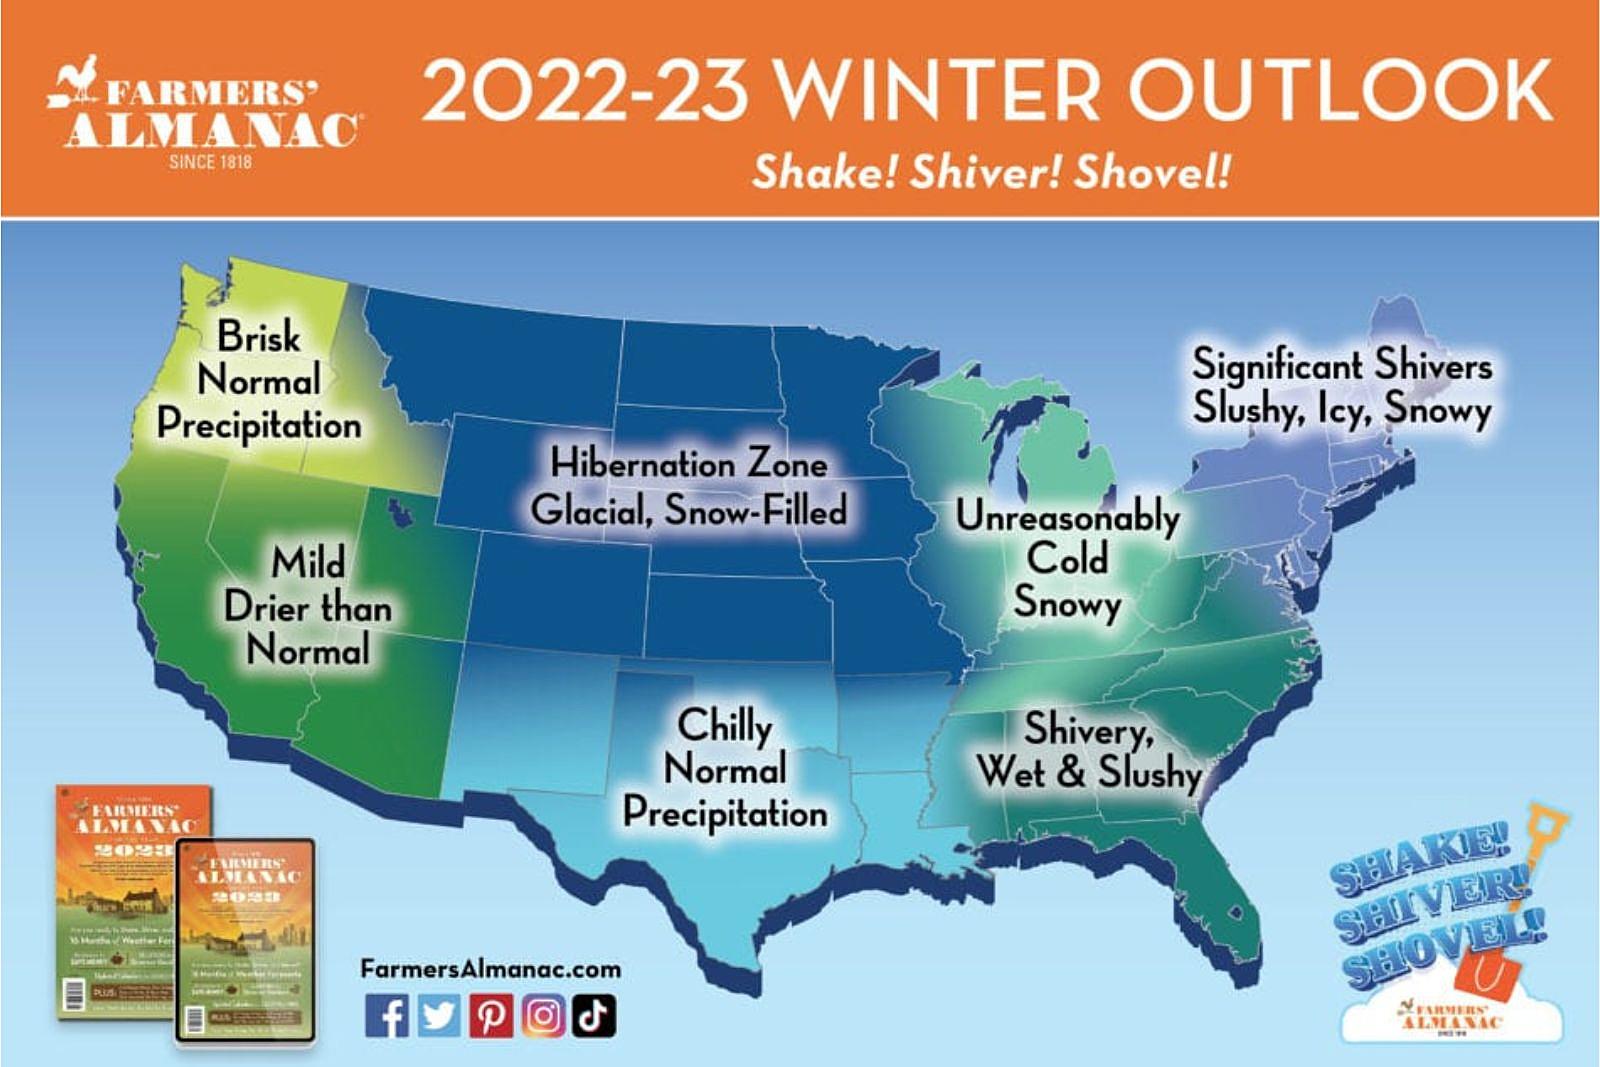 Will Portland get snow? Rod Hill Winter Outlook 2022-23